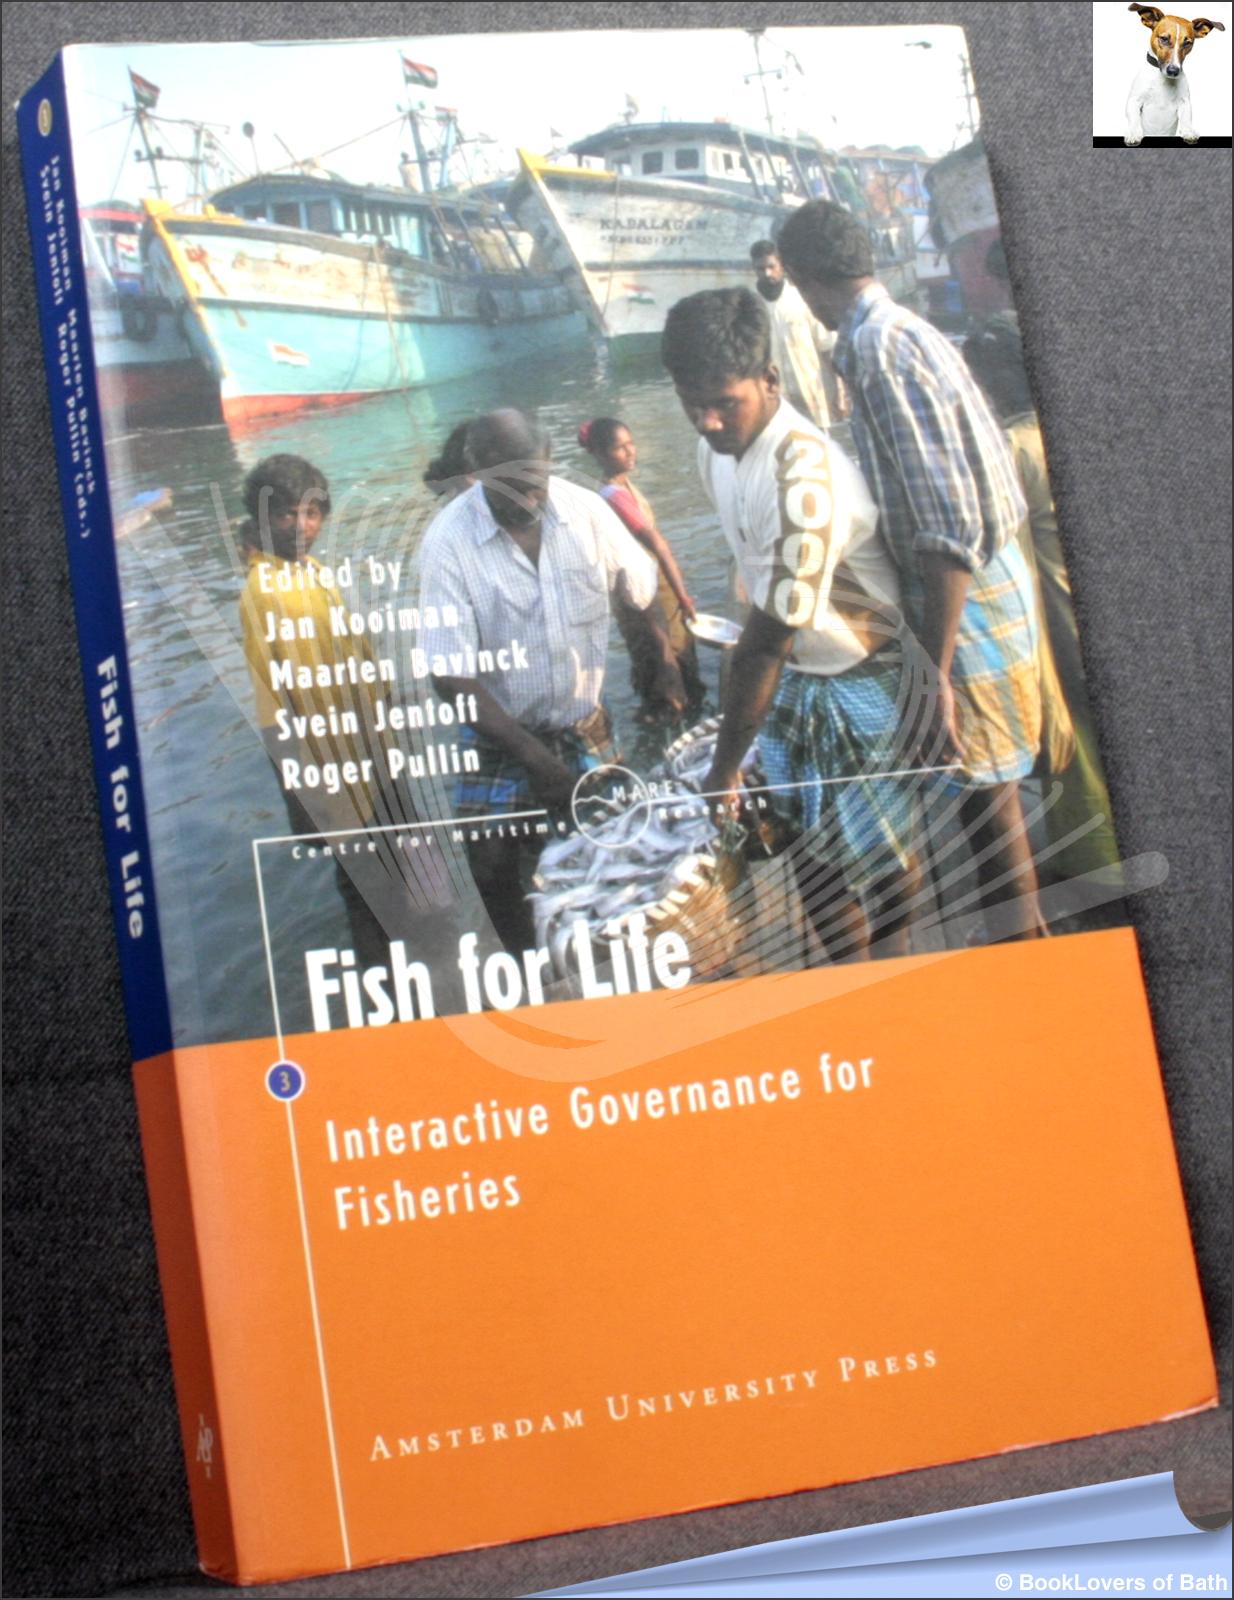 Fish for Life: Interactive Governance for Fisheries - Edited by Jan Kooiman, Svein Jentoft, Roger Pullin & Maarten Bavinck